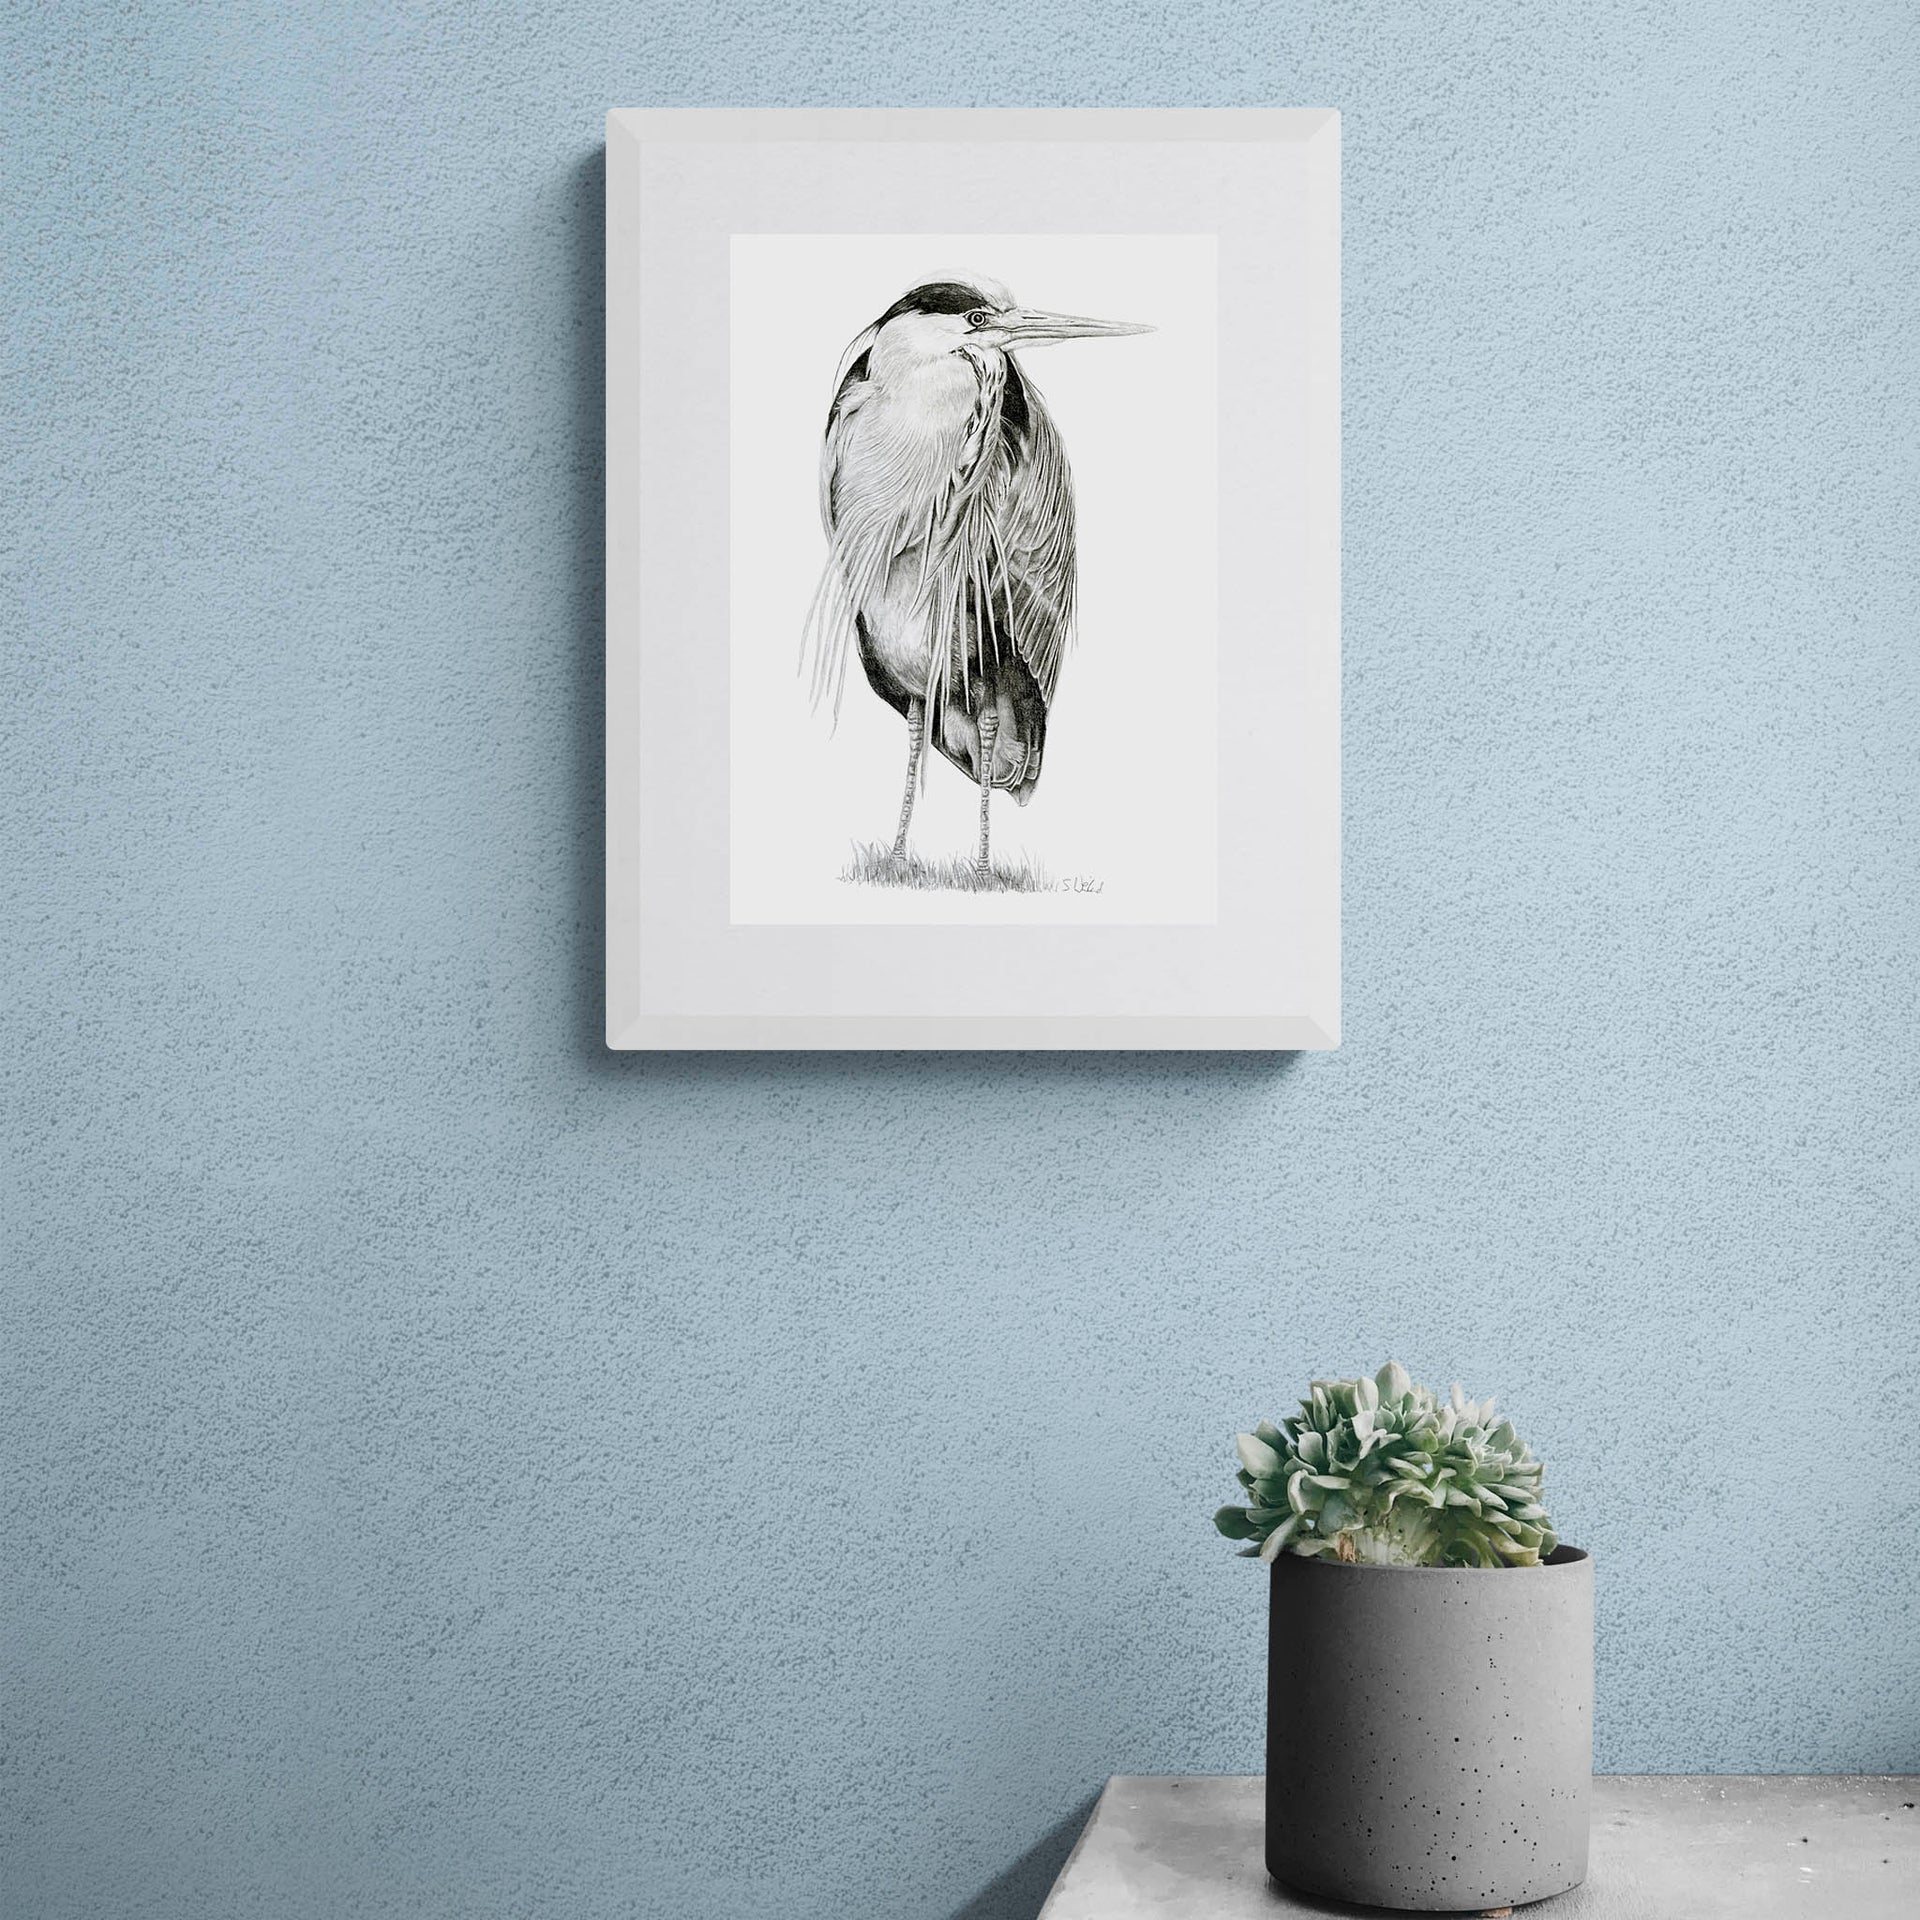 Heron pencil drawing print in white frame